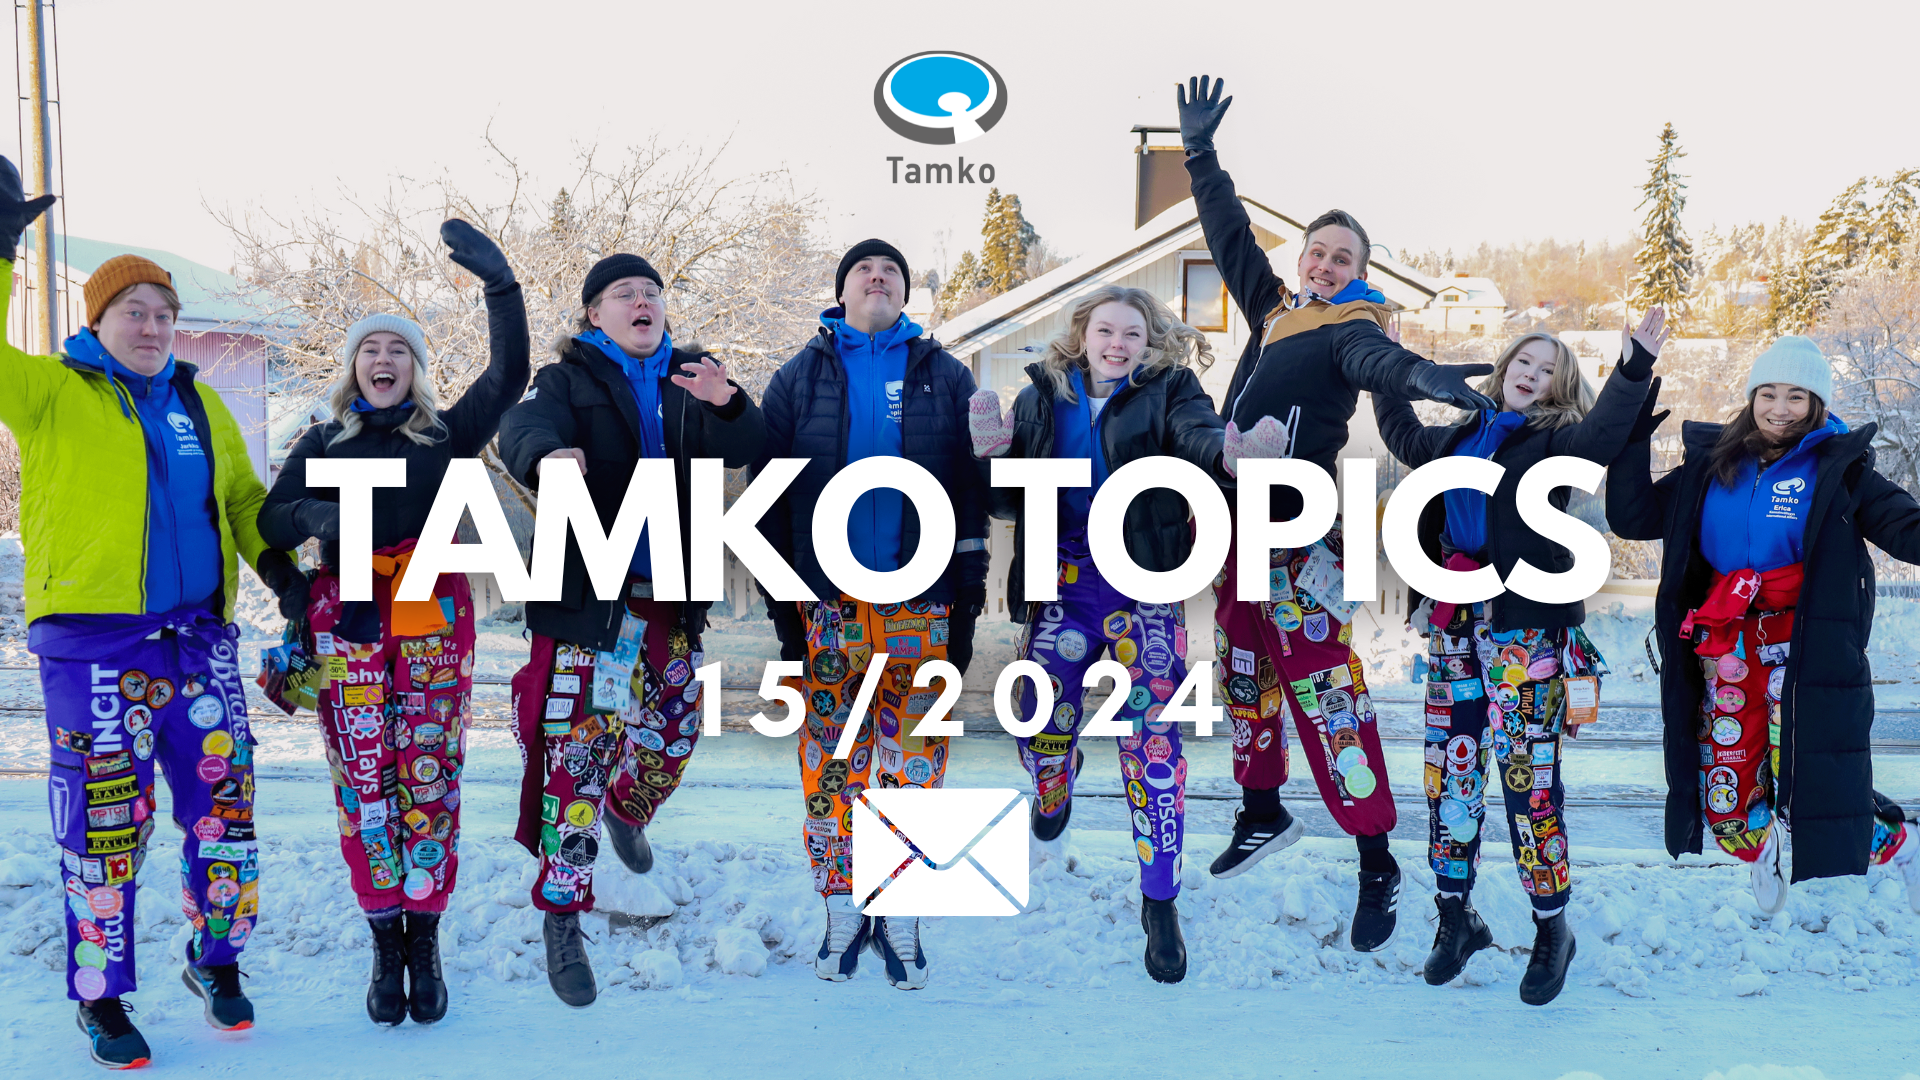 Tamko Topics 15/2024